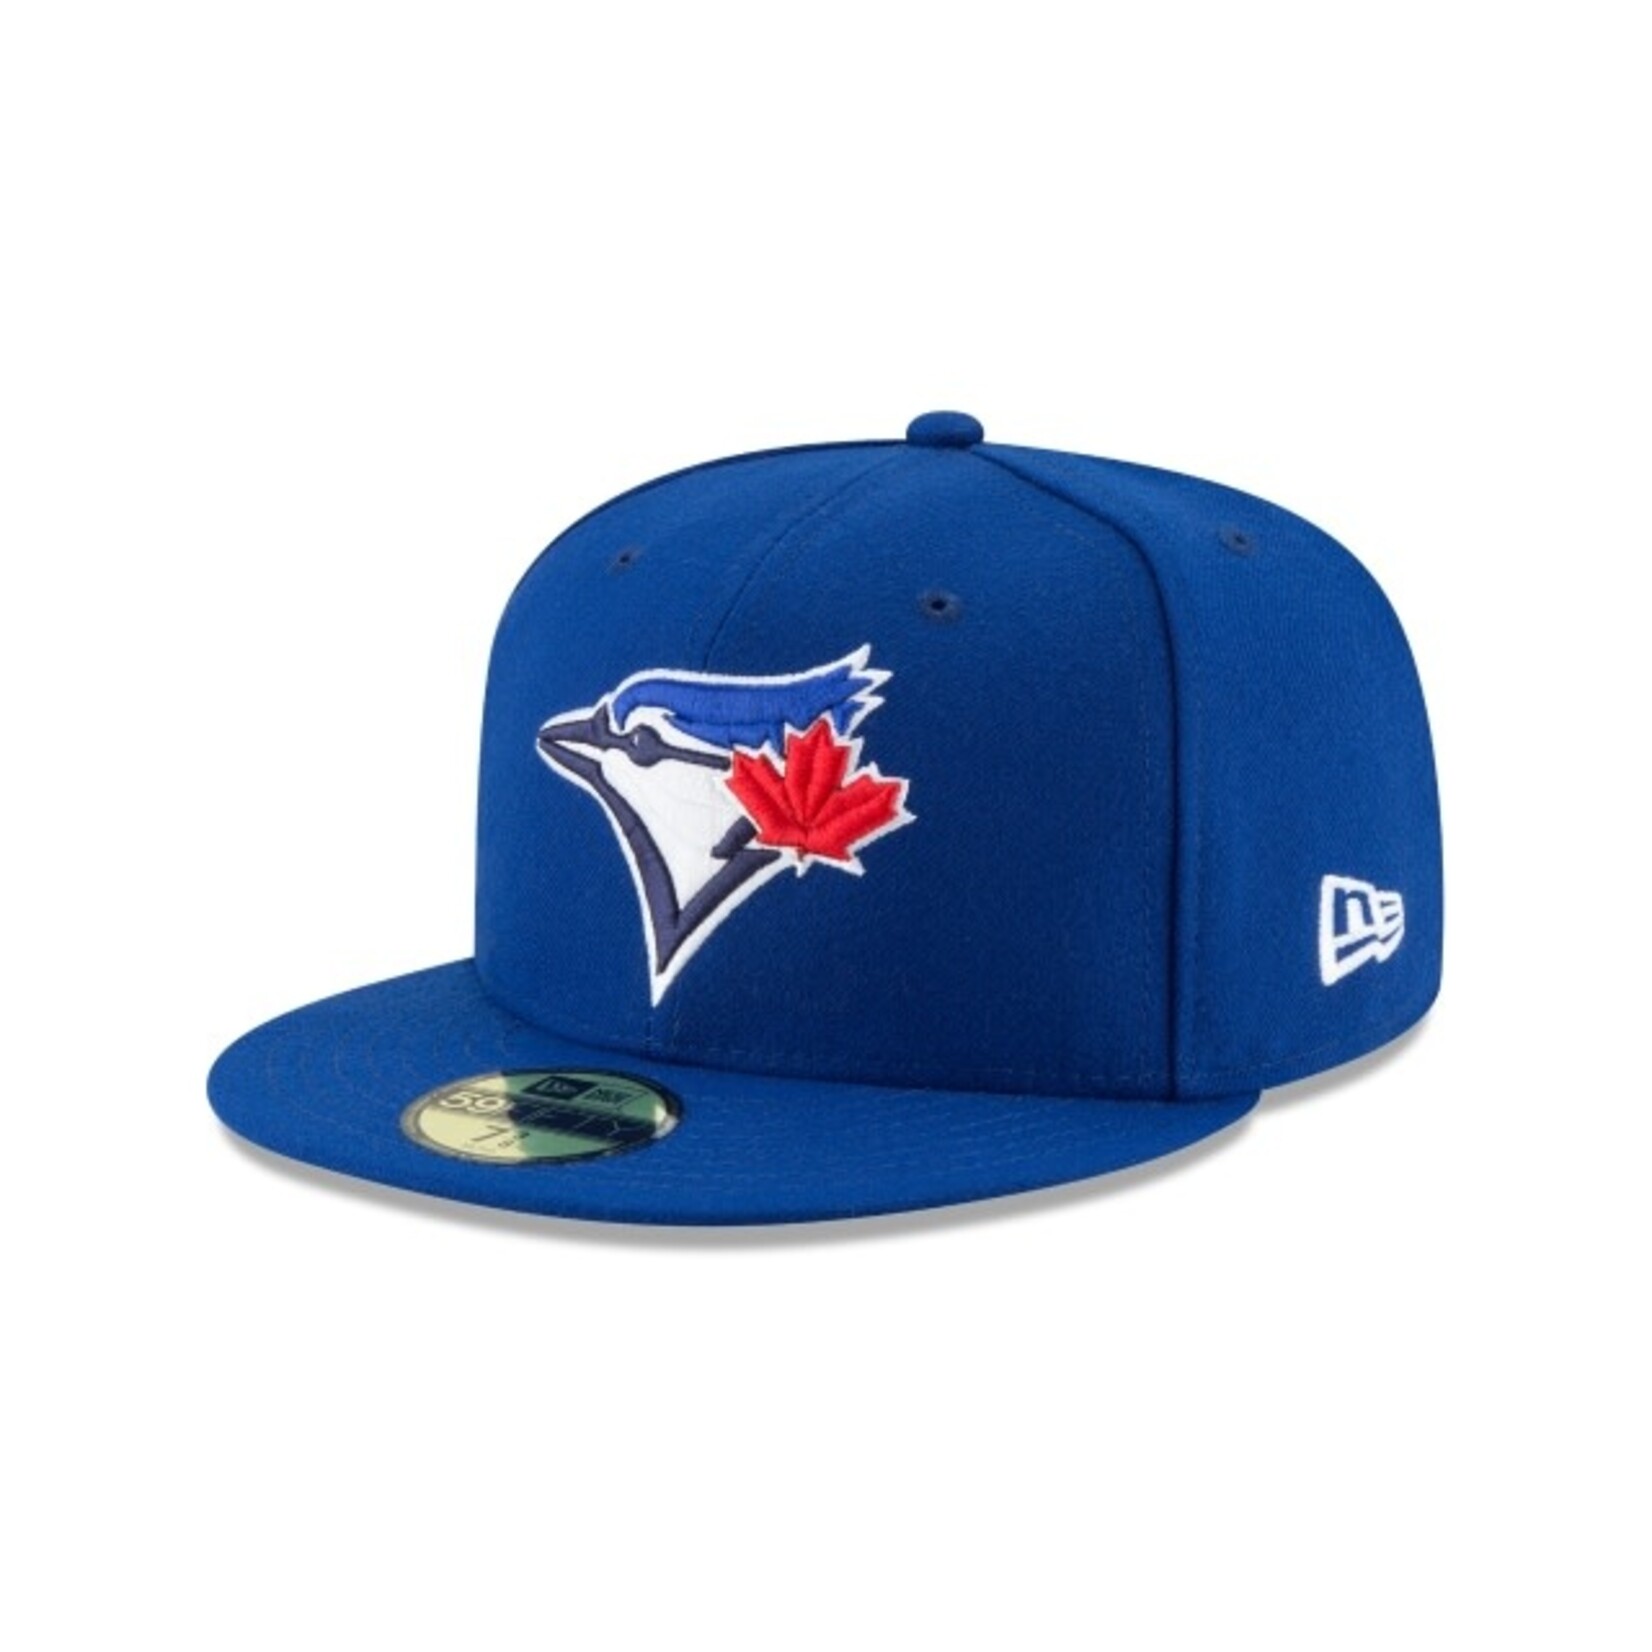 New Era New Era Hat, 5950 On-Field AC, MLB, Toronto Blue Jays, Game